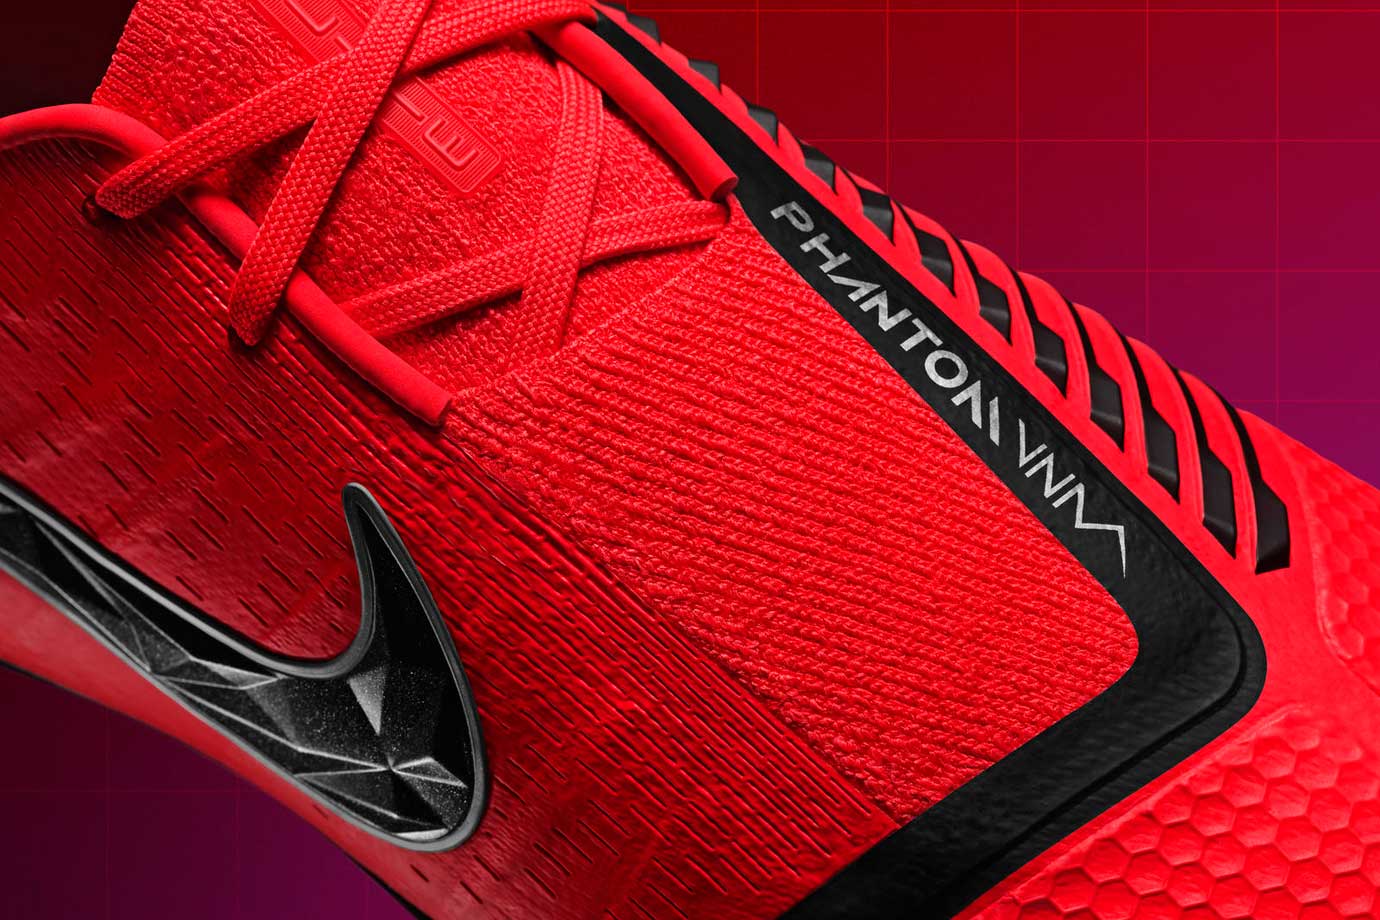 Nike presenta los nuevos botines PhantomVNM